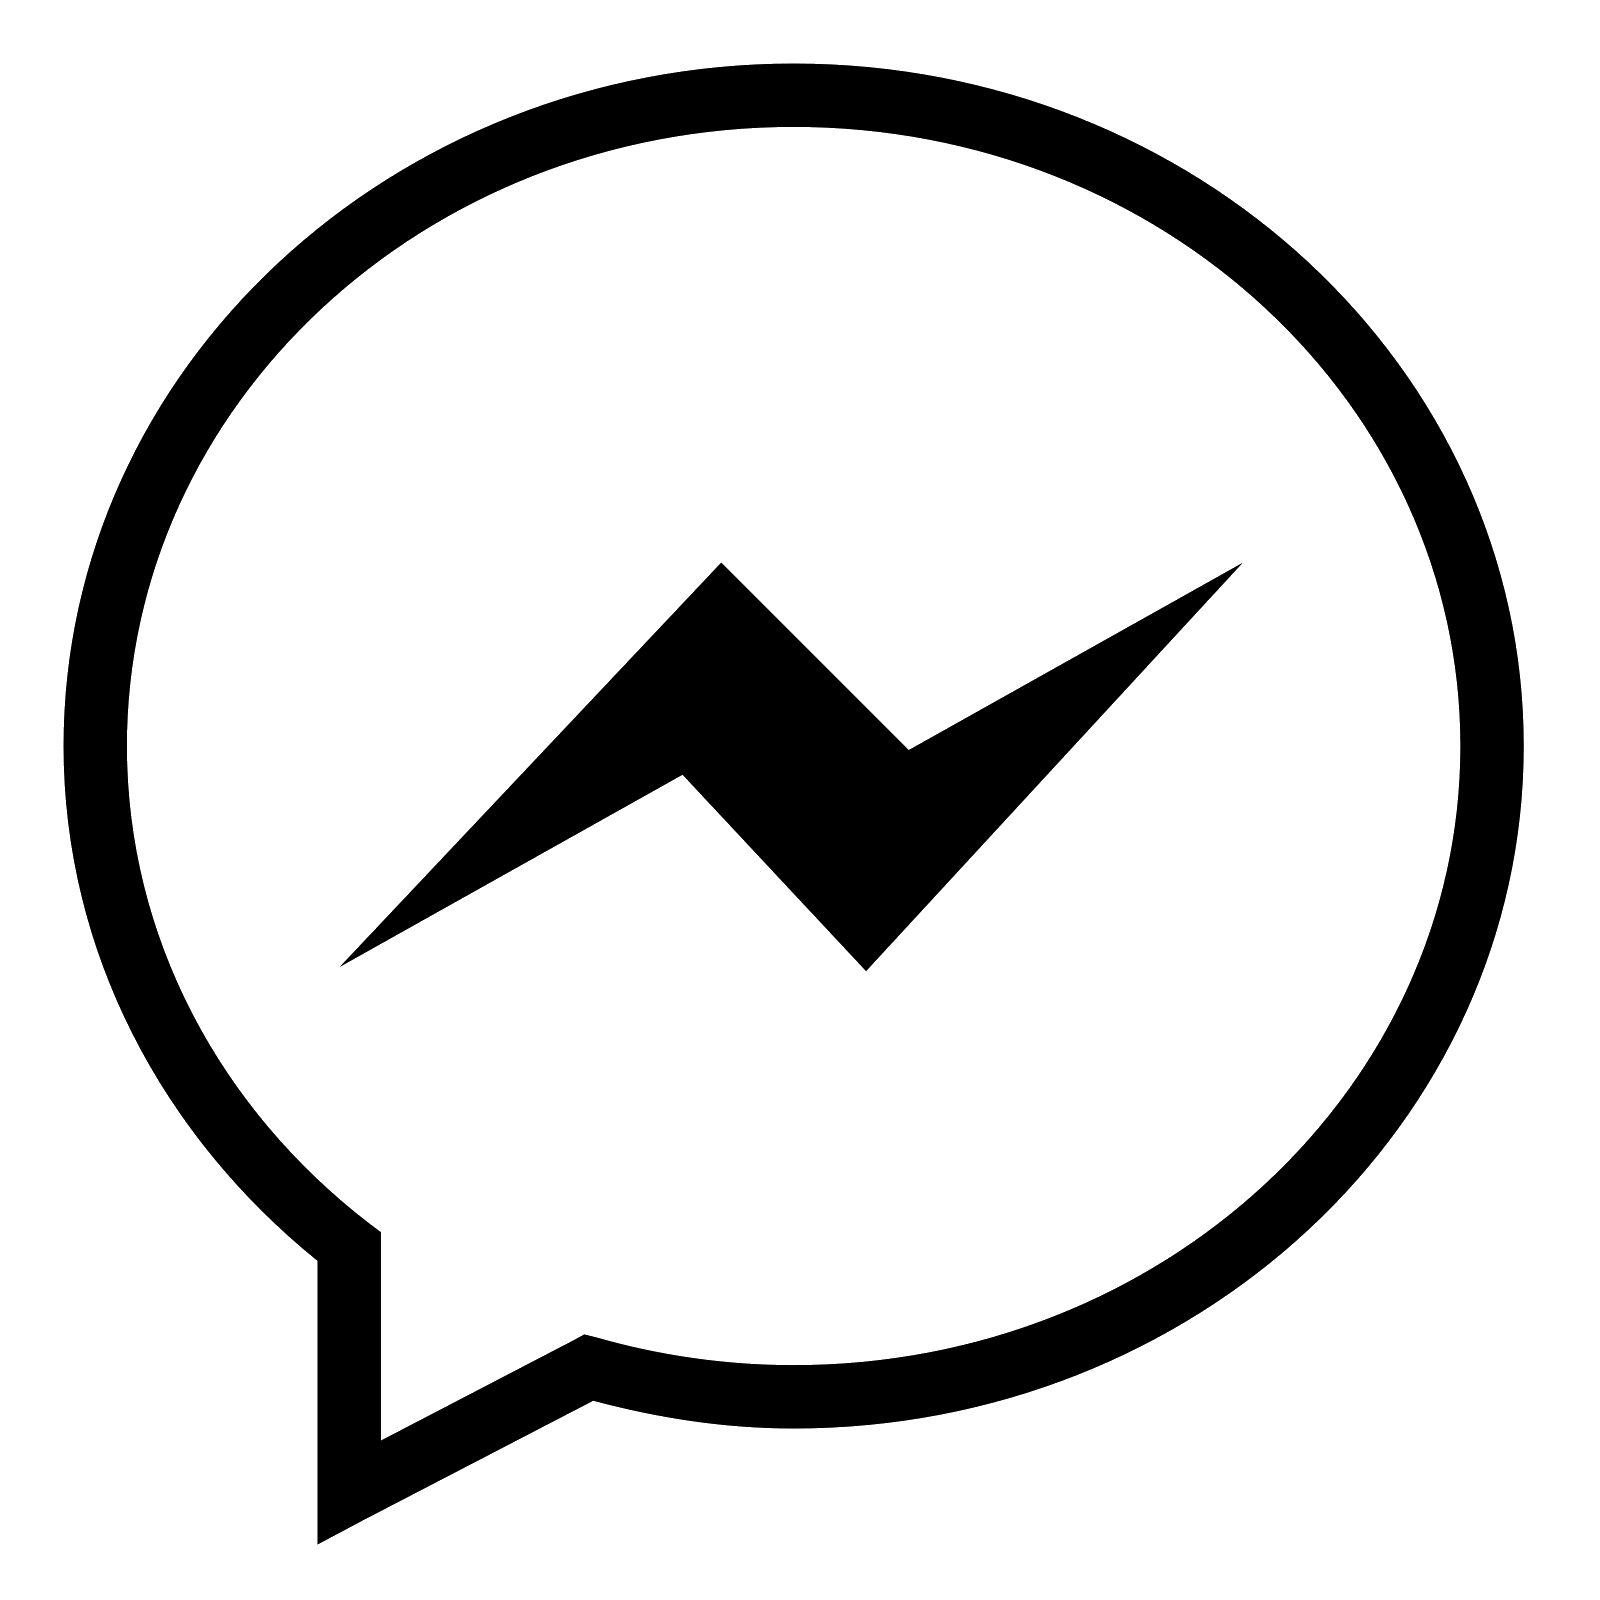 New Facebook Messenger Logo - Facebook messenger icon transparent 2018 : Kin coin offline wallet